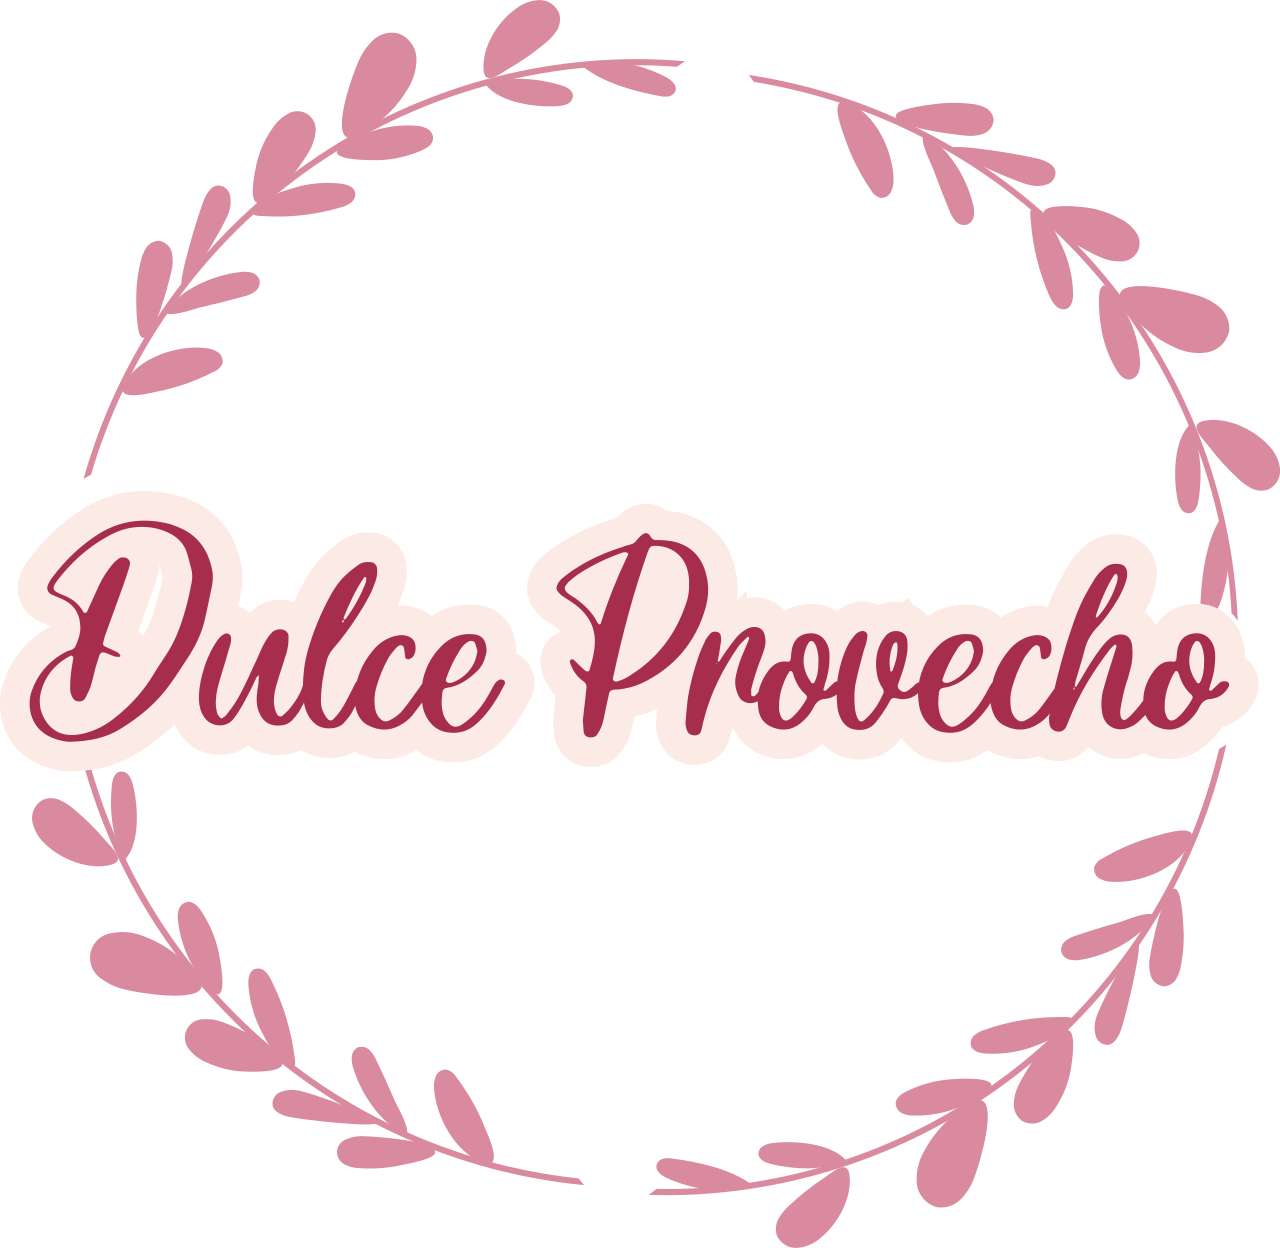 Dulce Provecho 's logo